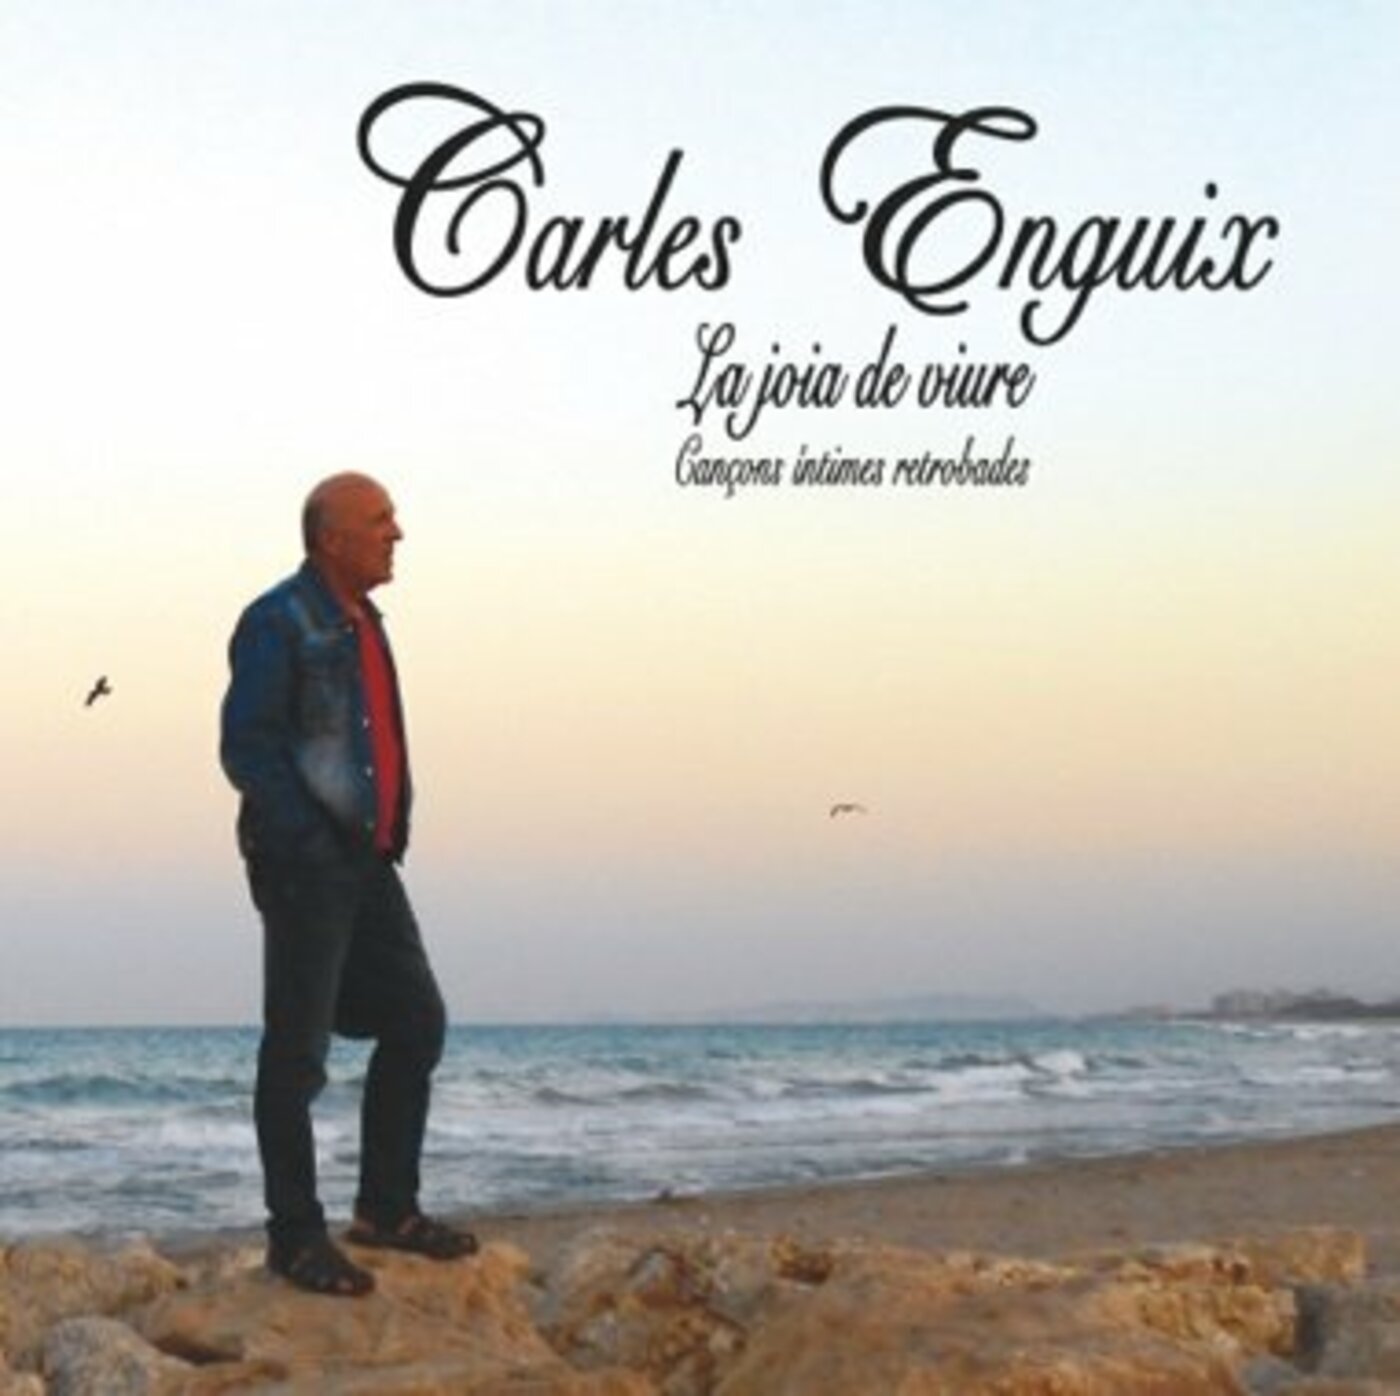 Carles Enguix - La joia de viure | musica en valencià